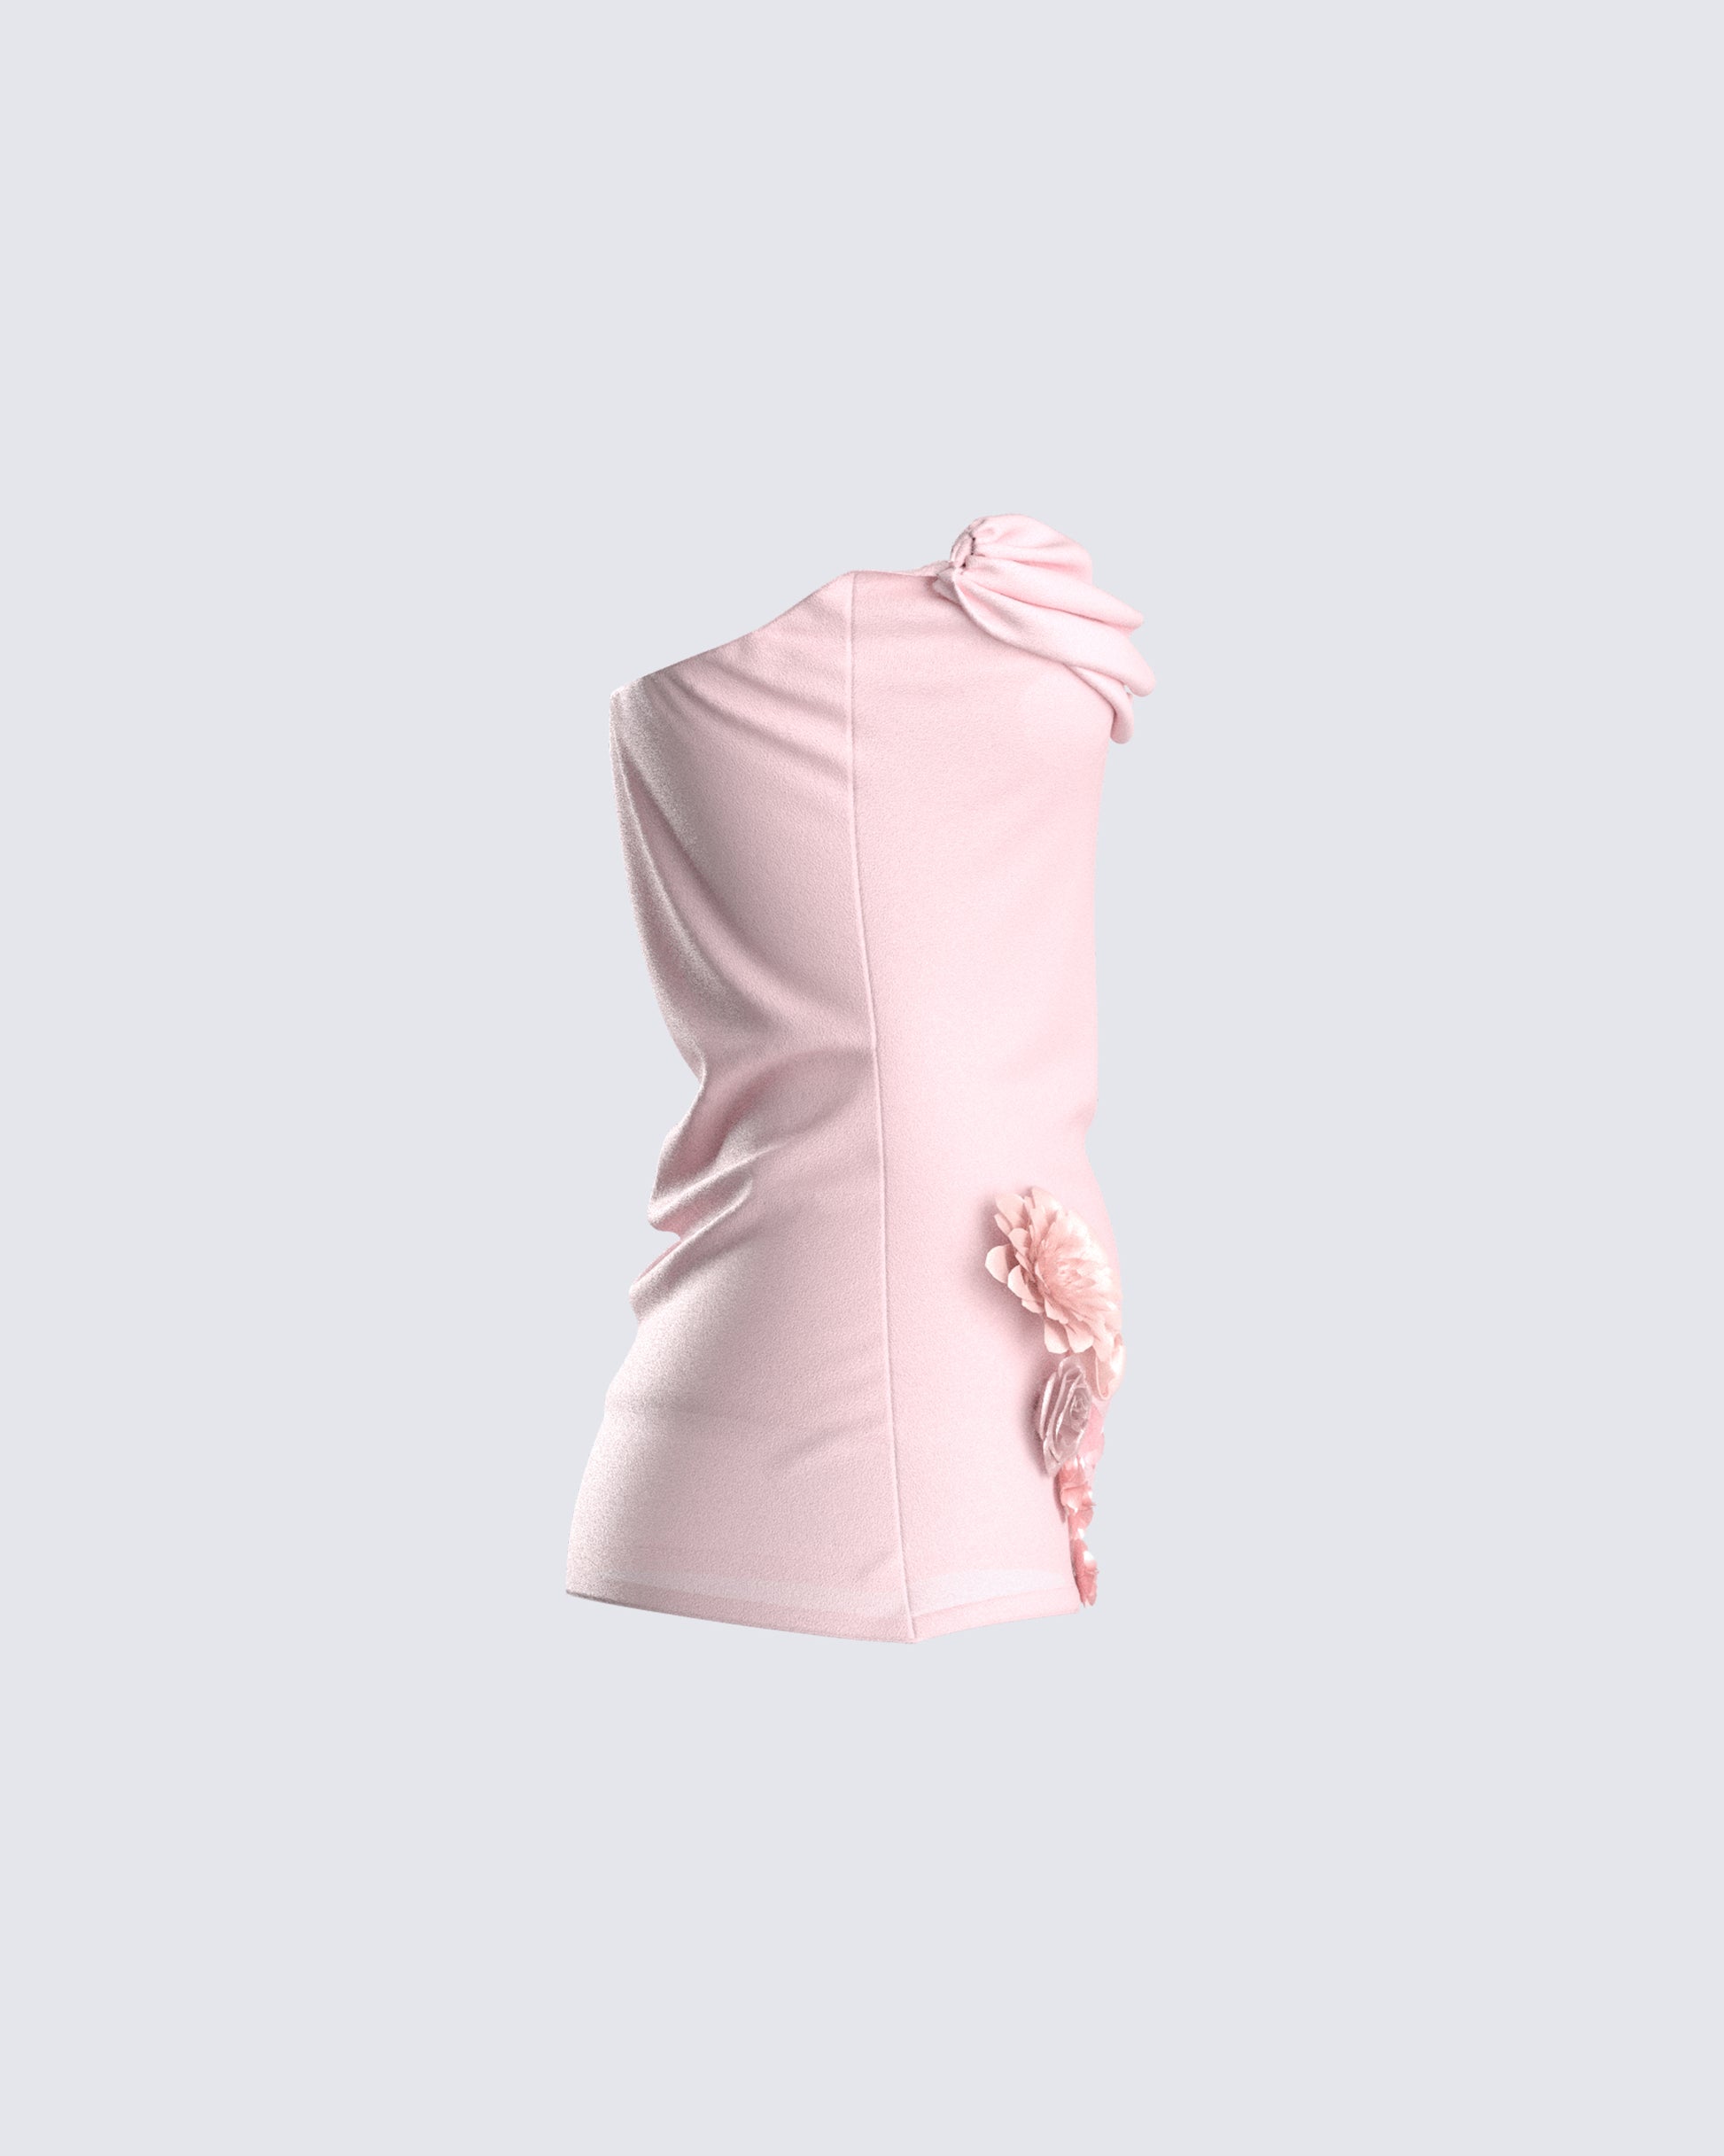 Zara, Tops, Zara Cropped Floral Pink Corset Top Xs